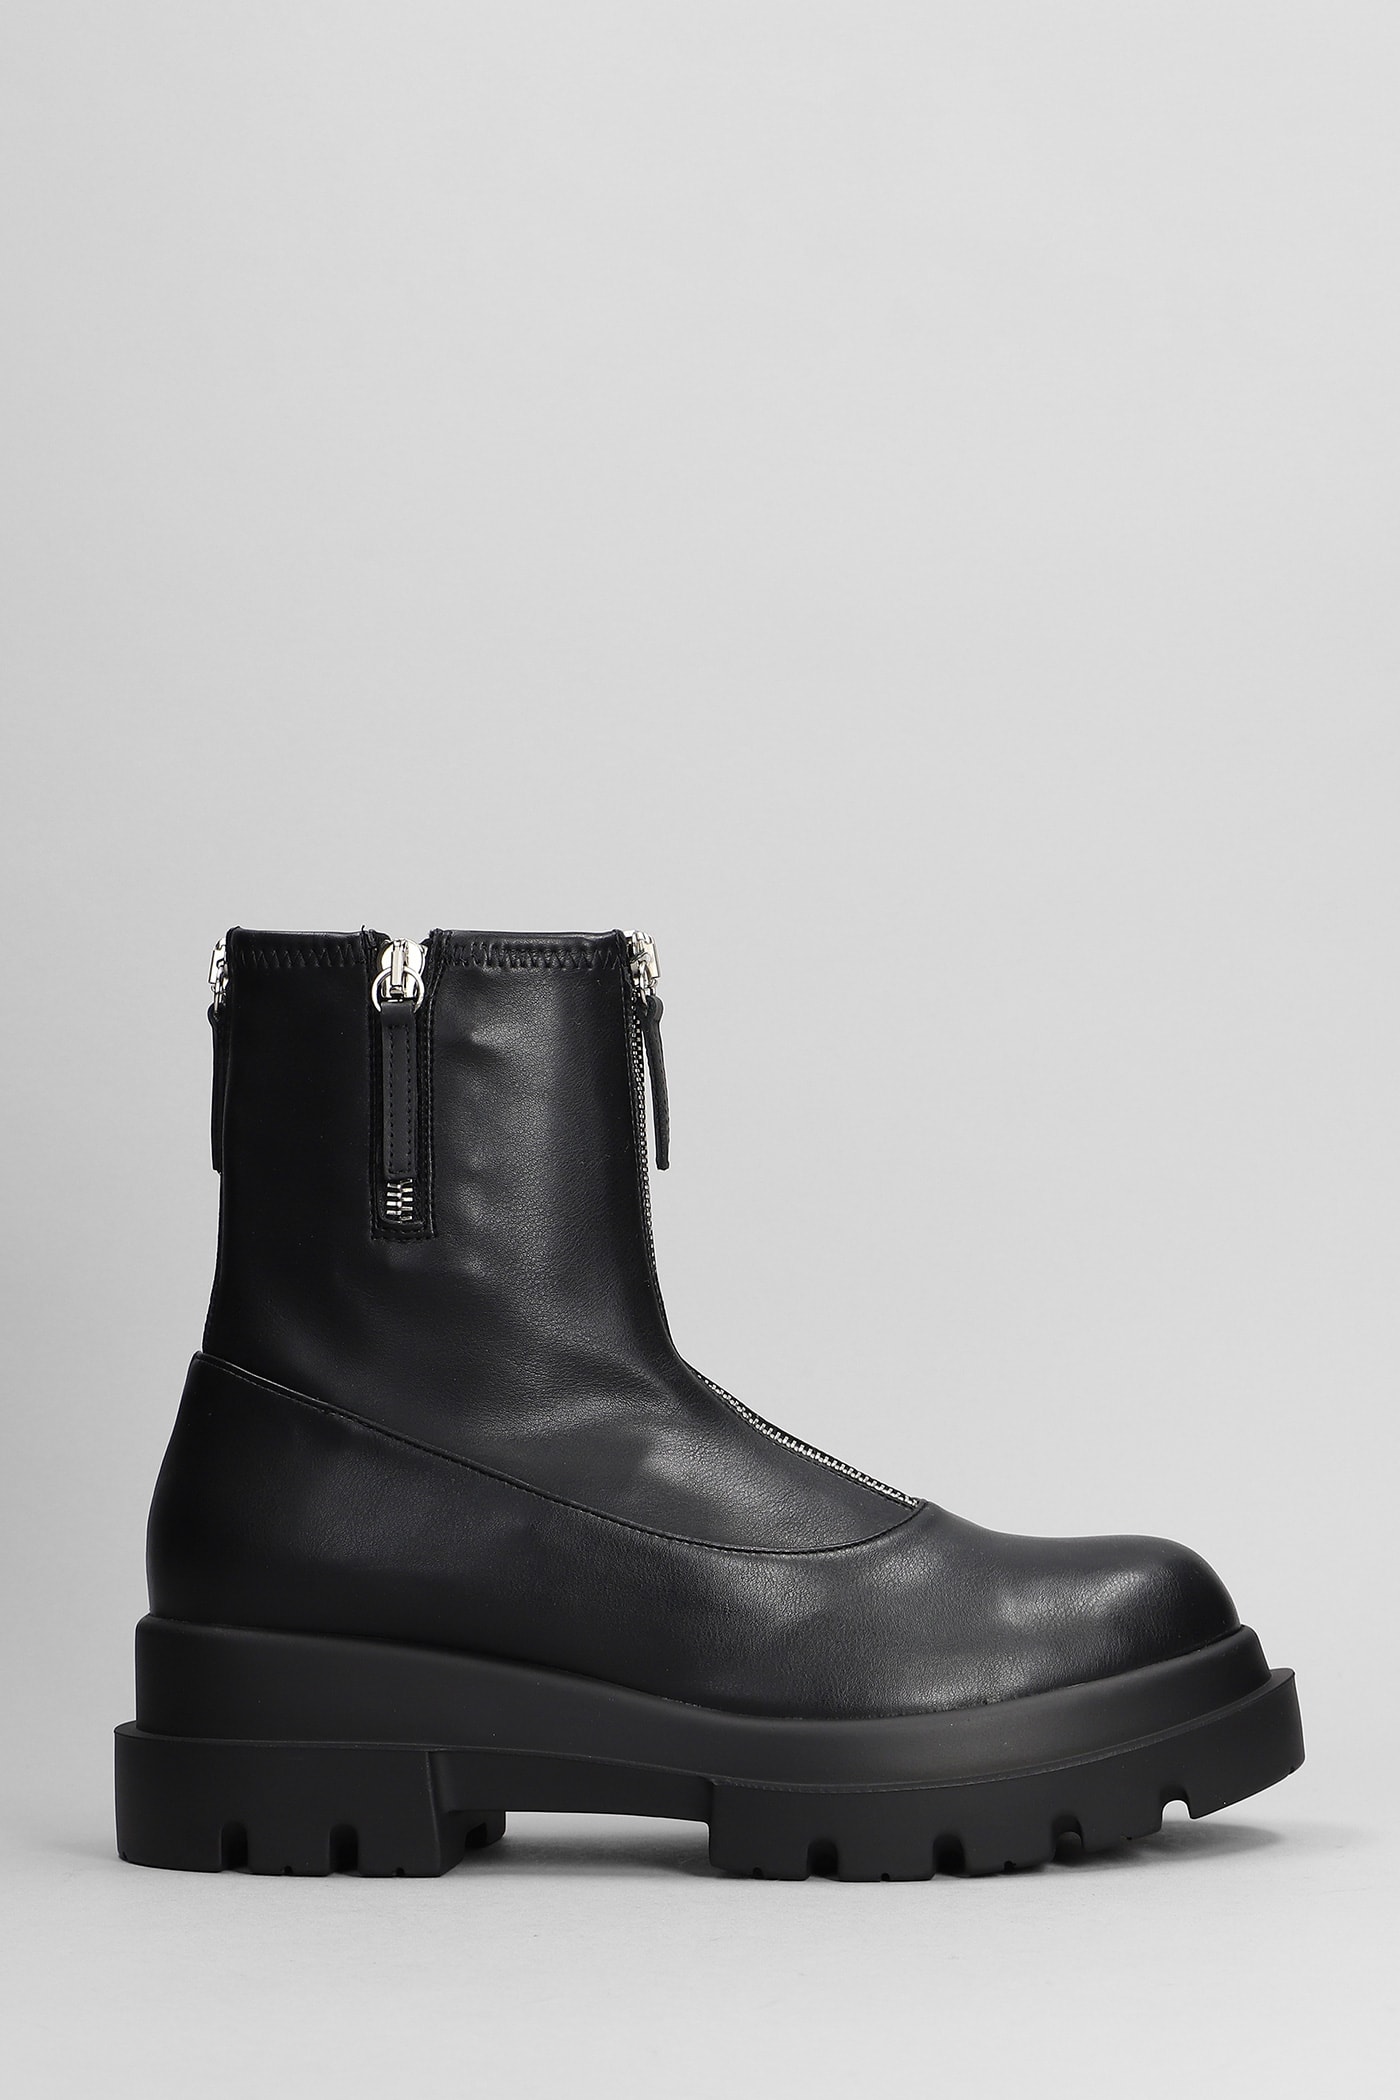 Giuseppe Zanotti Combat Boots In Black Leather